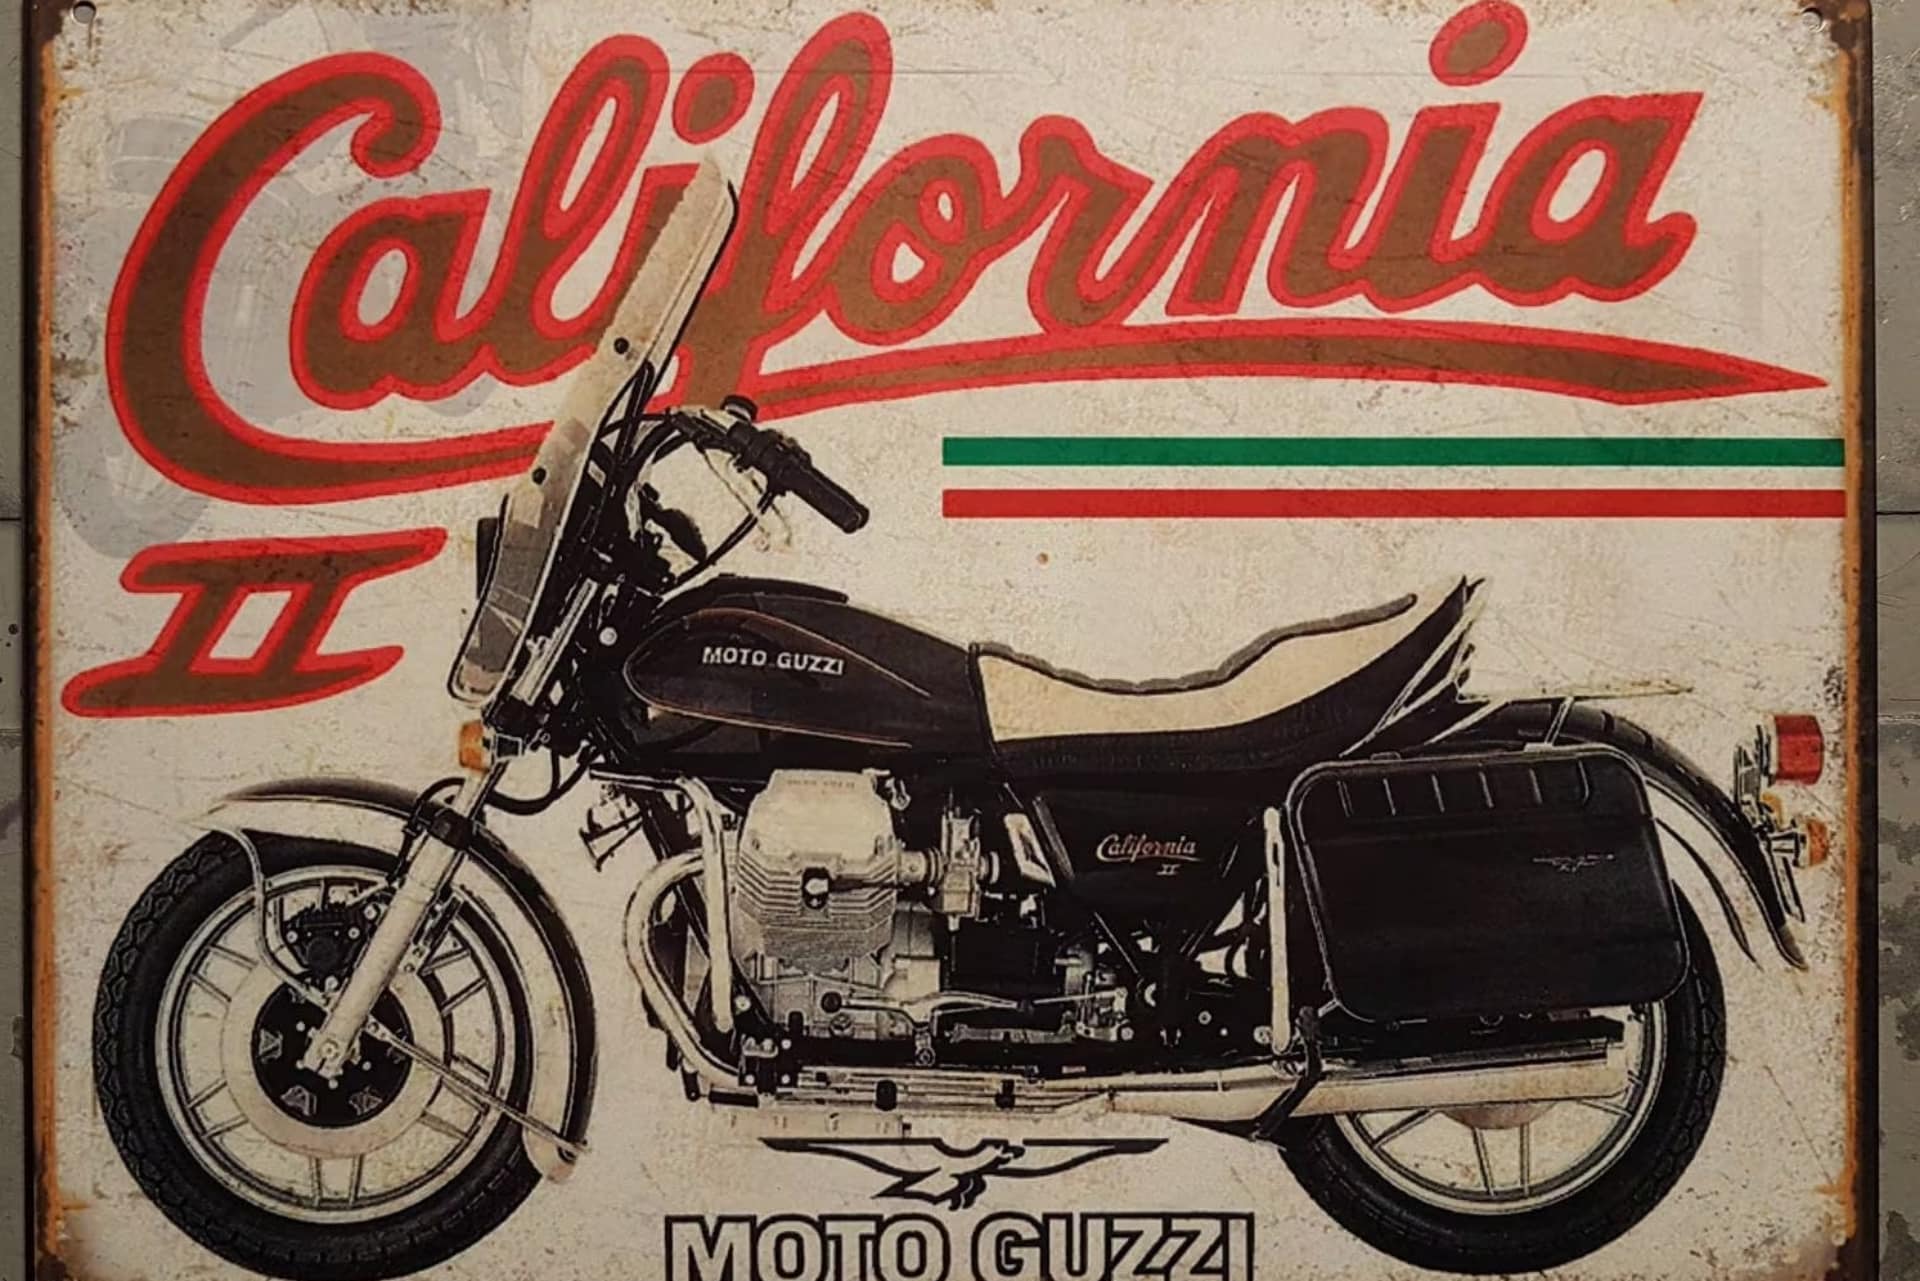 Moto Guzzi California